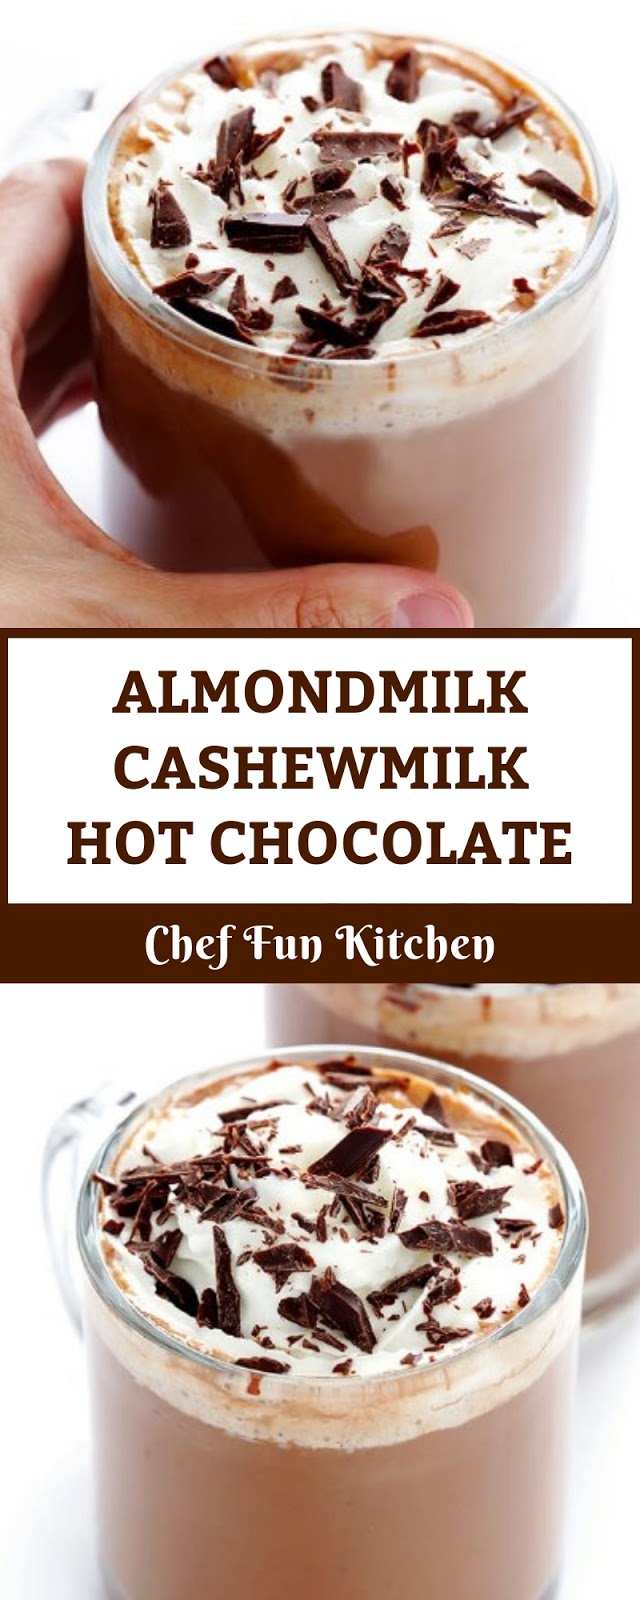 ALMONDMILK CASHEWMILK HOT CHOCOLATE